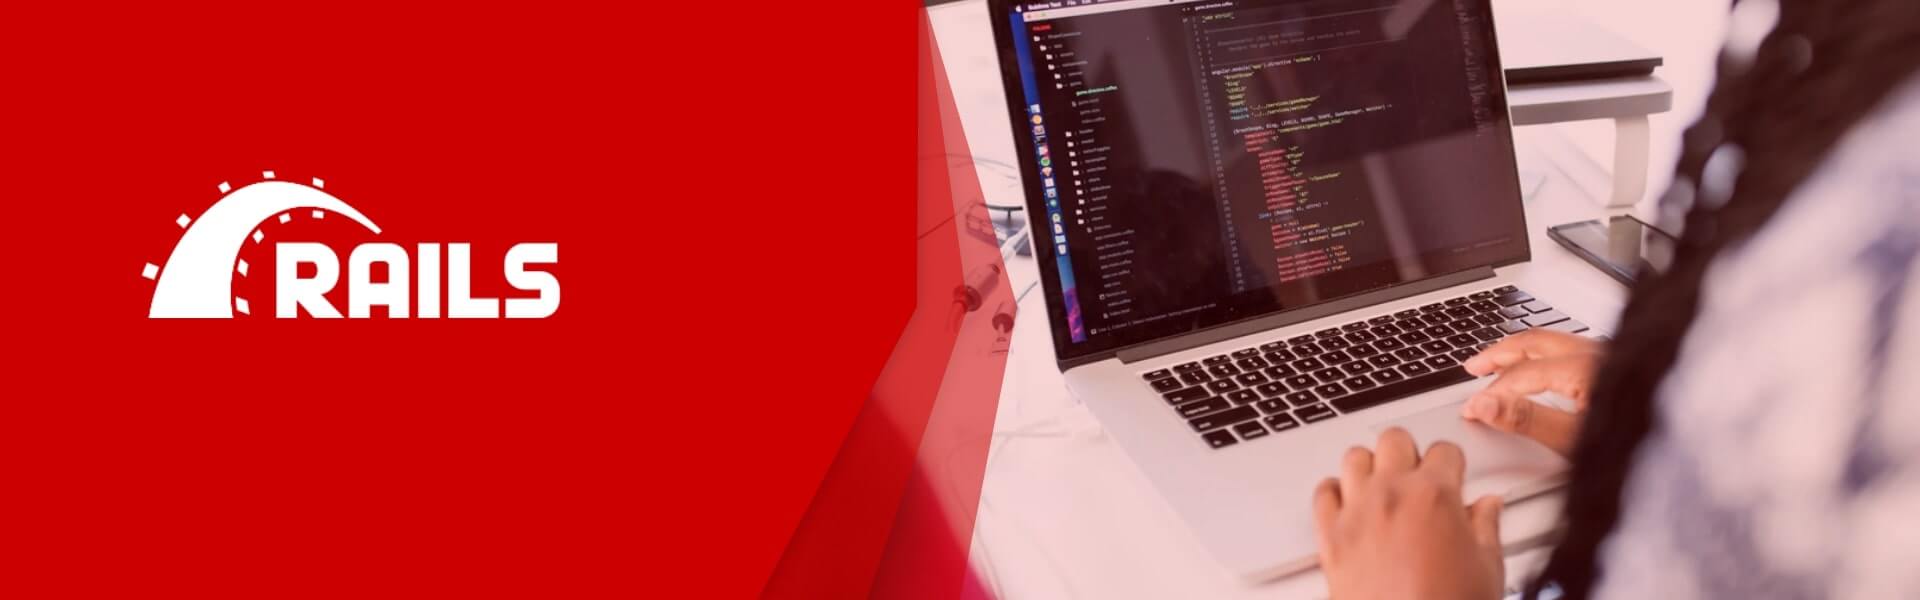 Ruby on Rails App Development Services